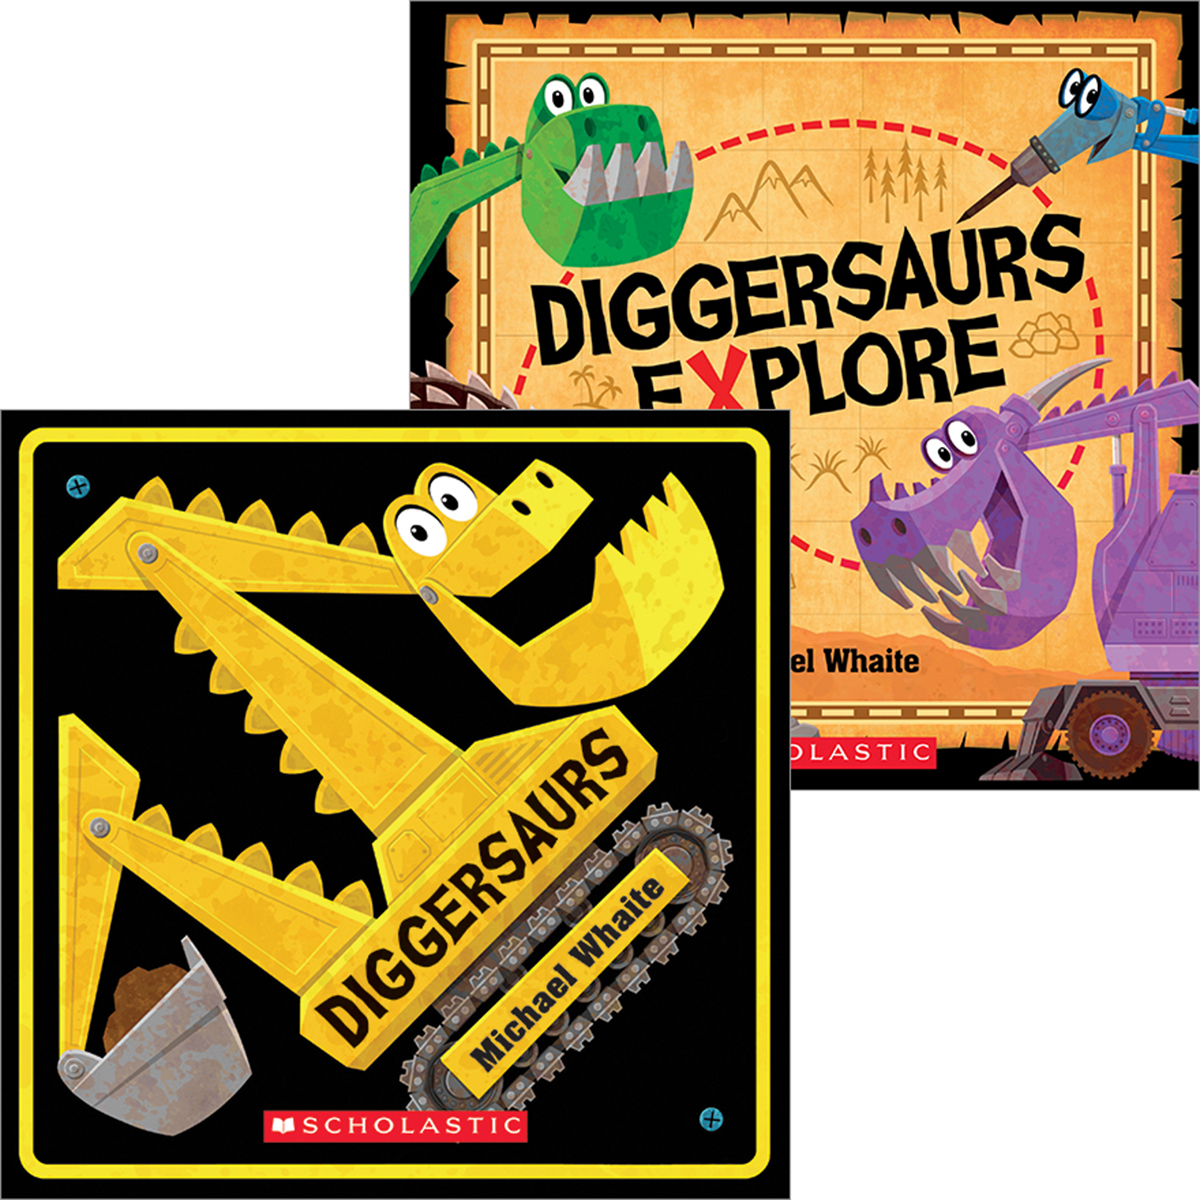  Diggersaurs Pack 